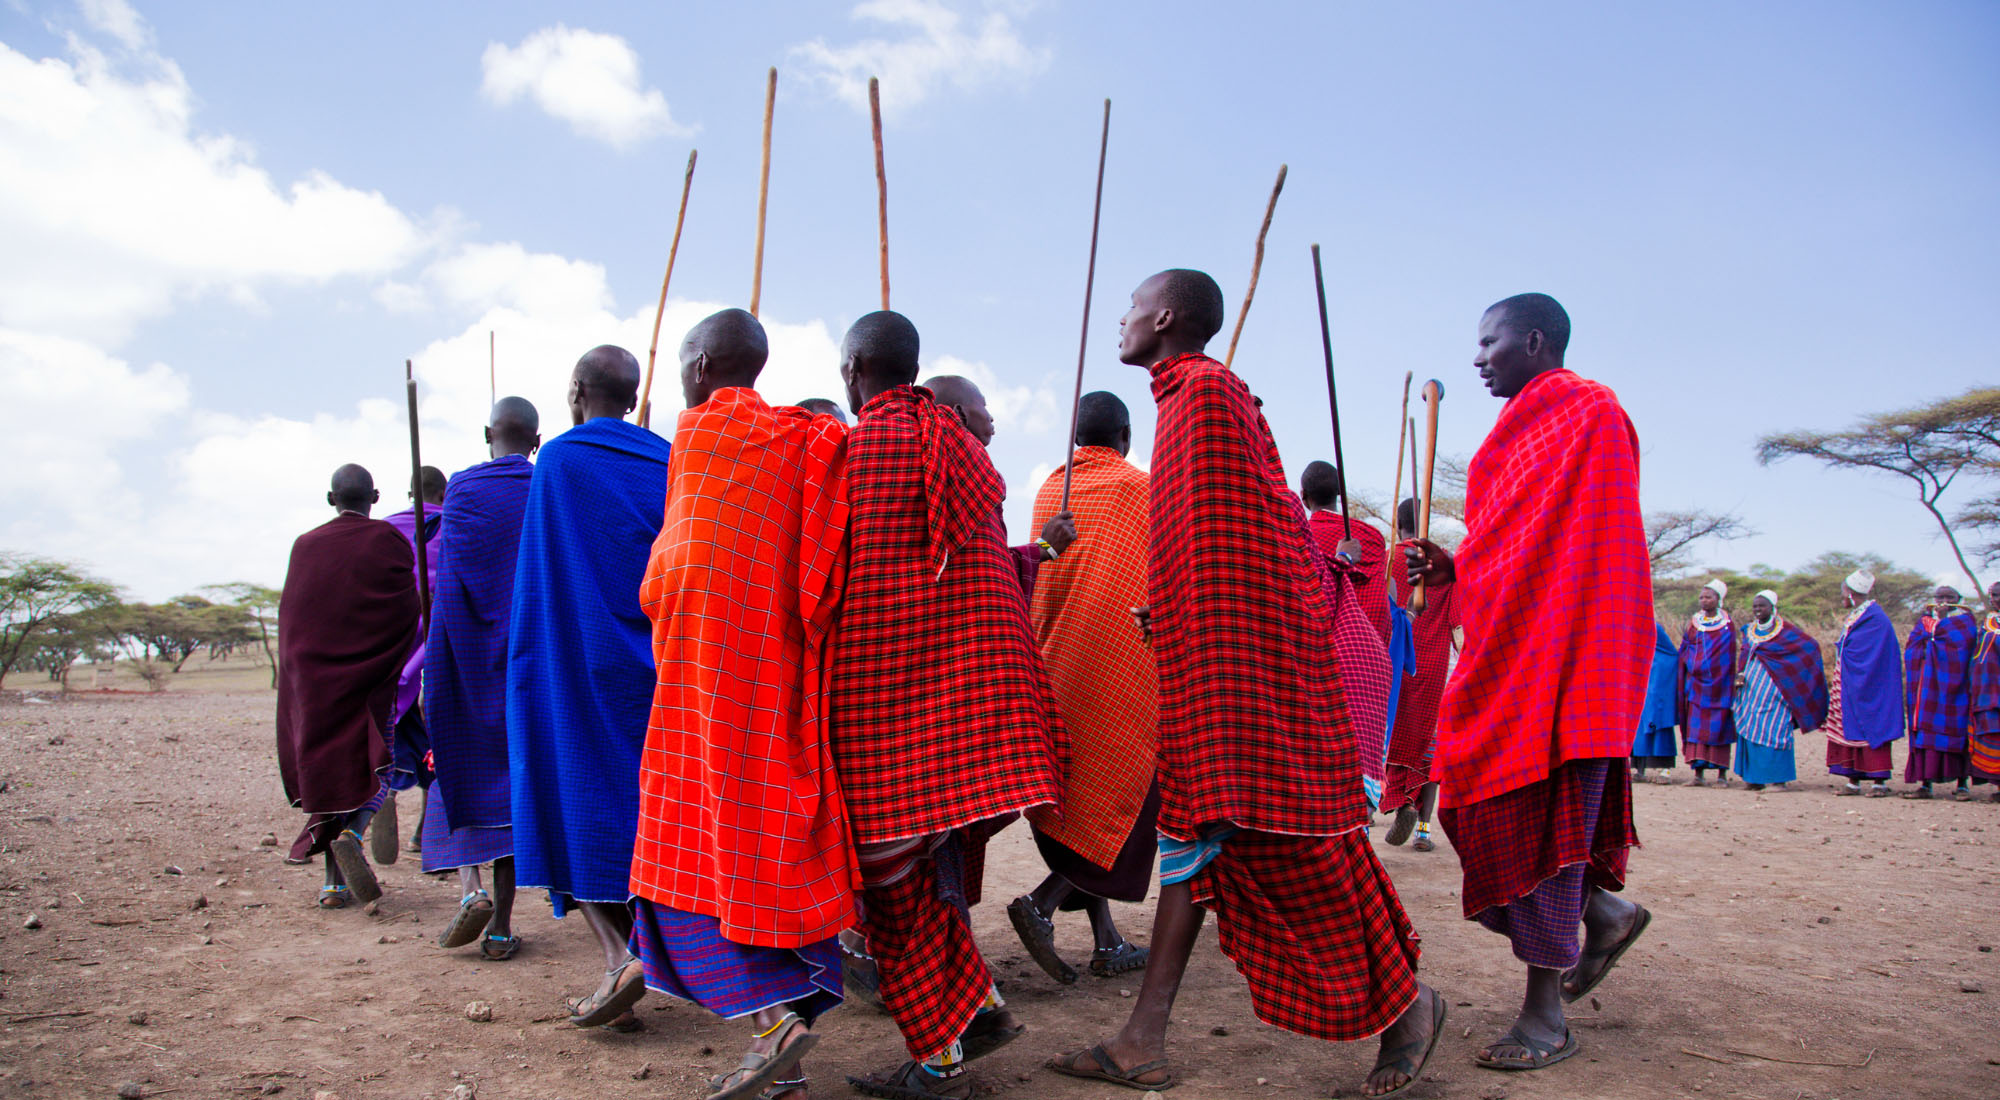 Visit a Maasai village